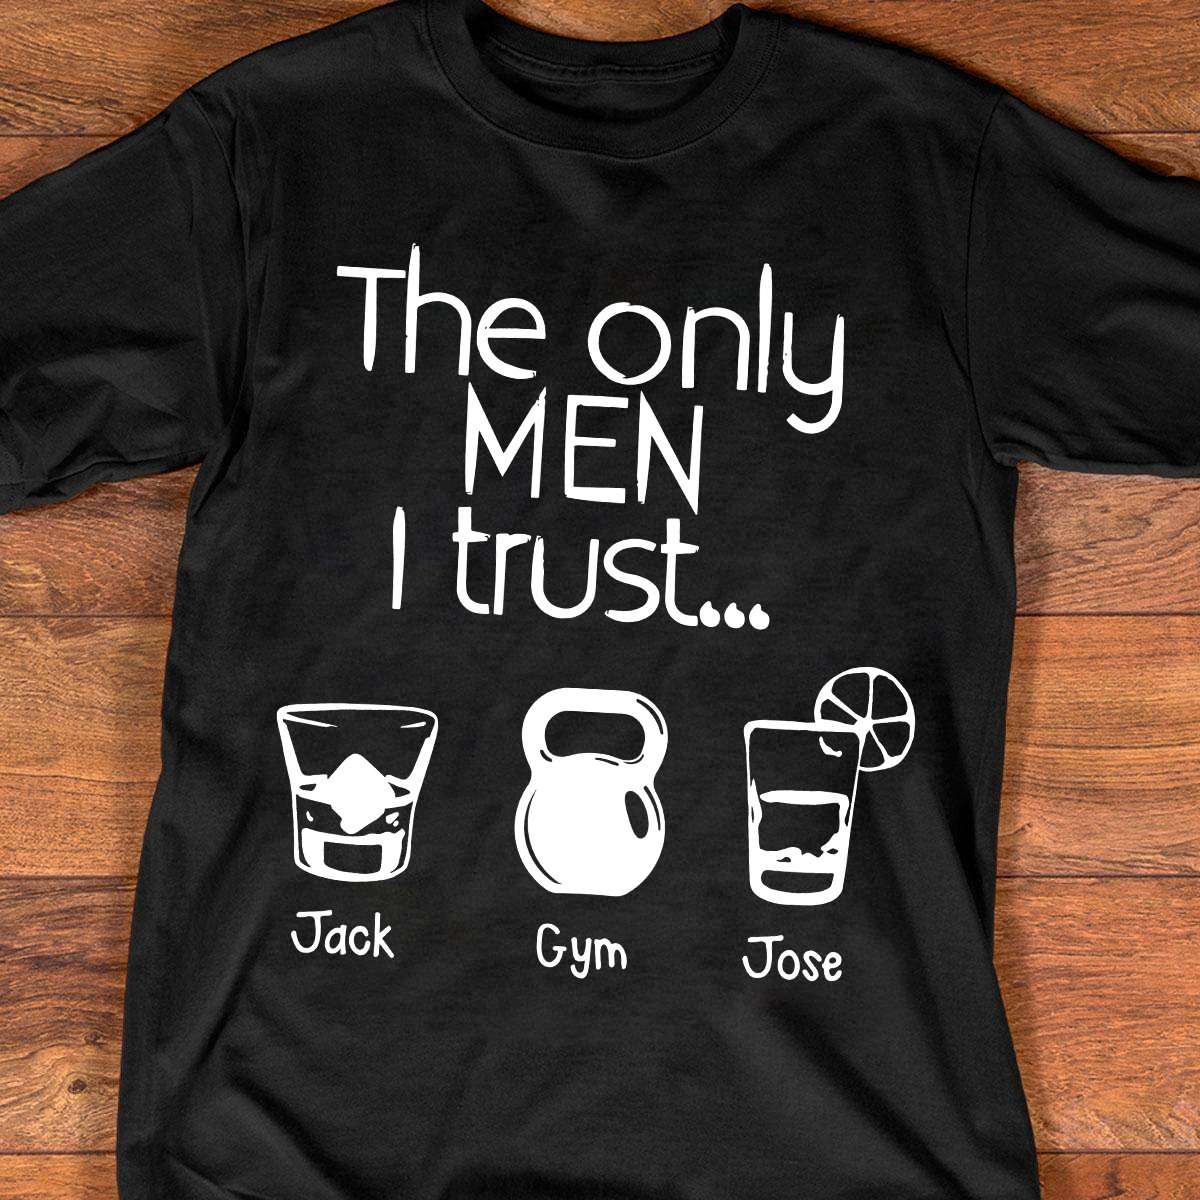 Gym And Wine Glass, Jack Daniels, Jose Cuervo - The only men i trust jack gym jose